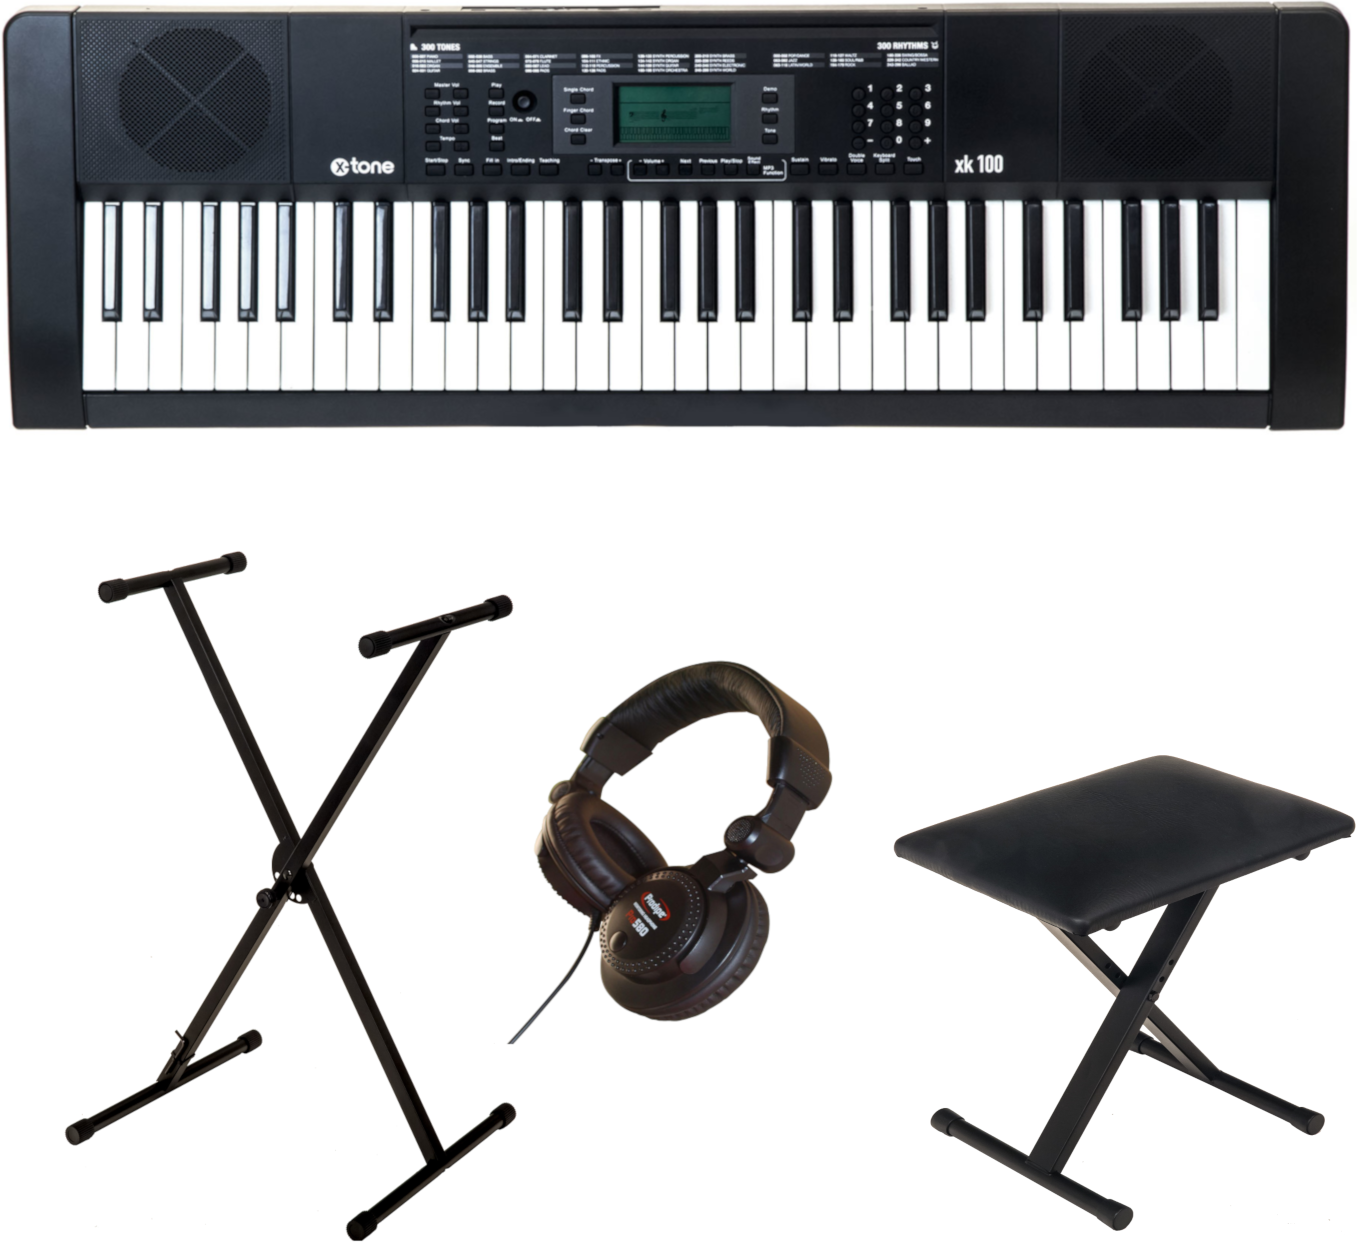 X-tone Xk100 + Stand X + SiÈge X + Casque Pro580 - Keyboard set - Main picture